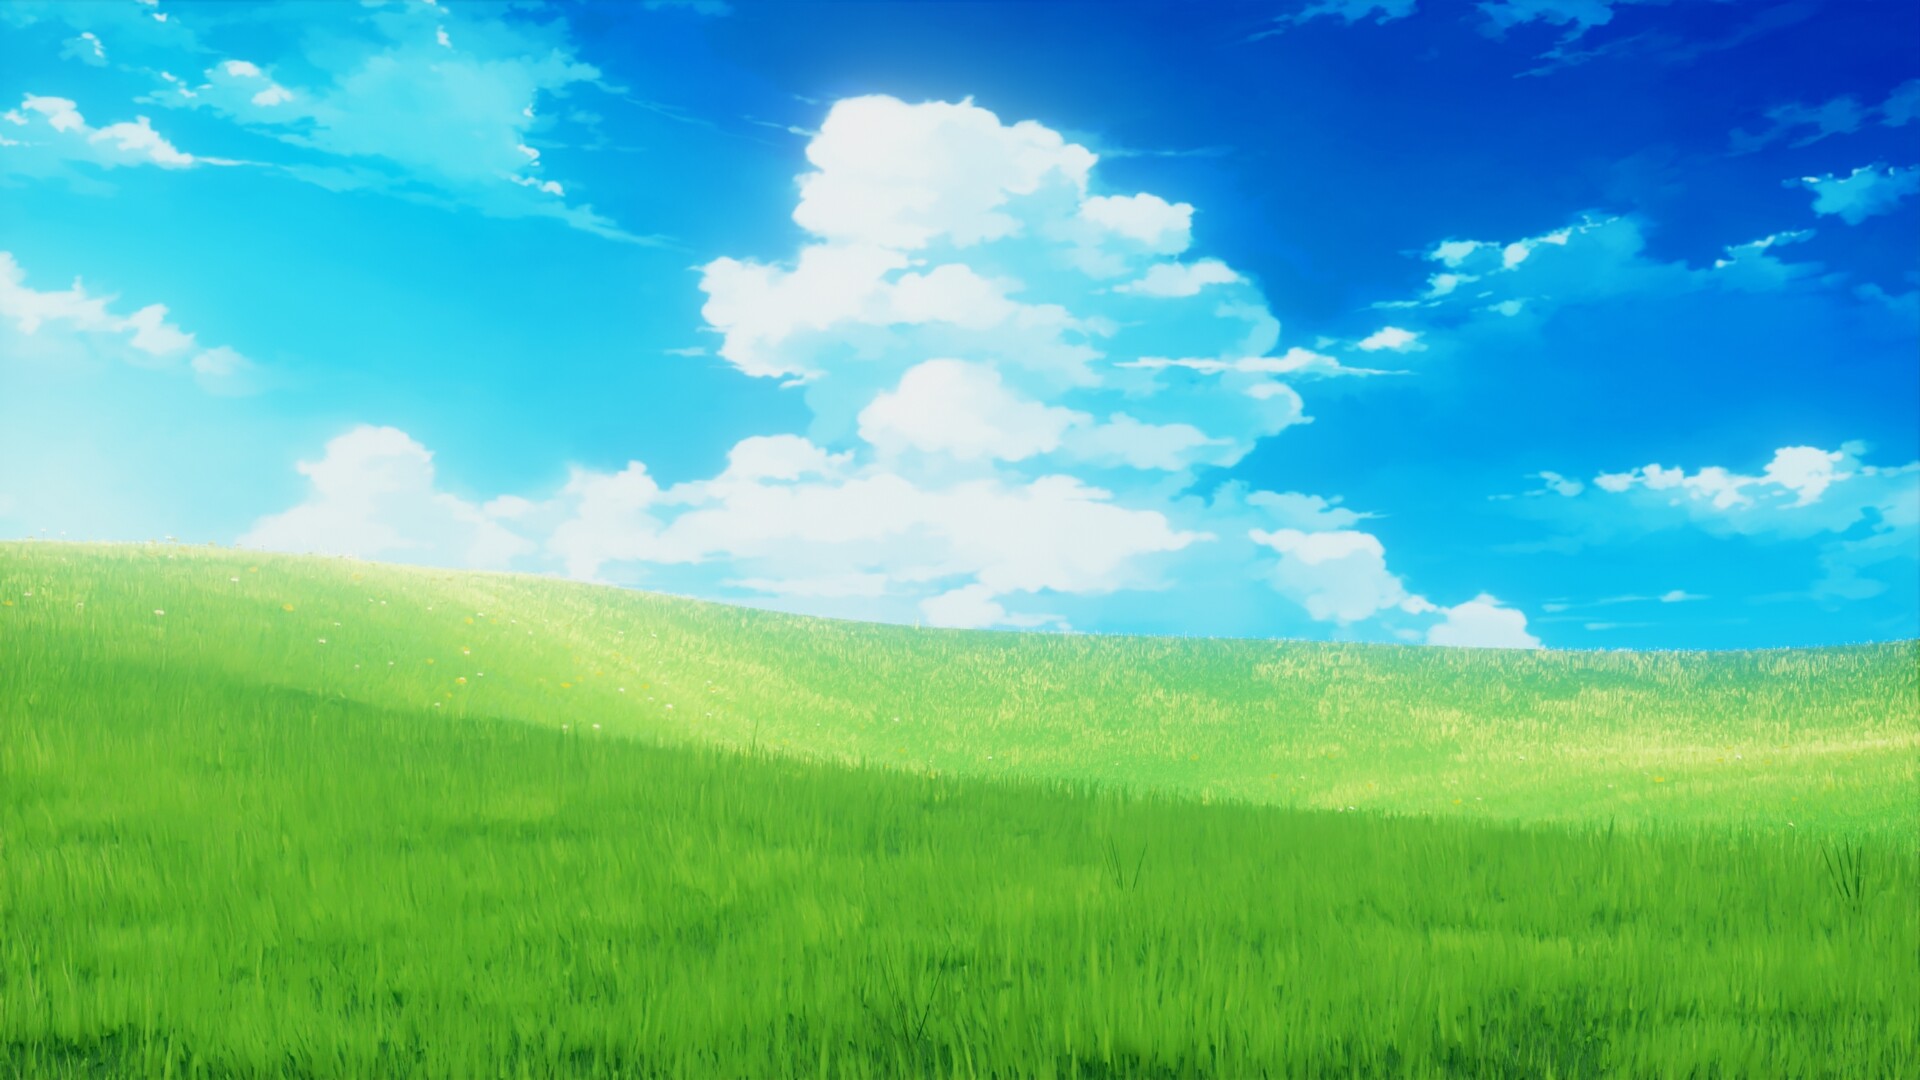 ArtStation - Anime Grass field